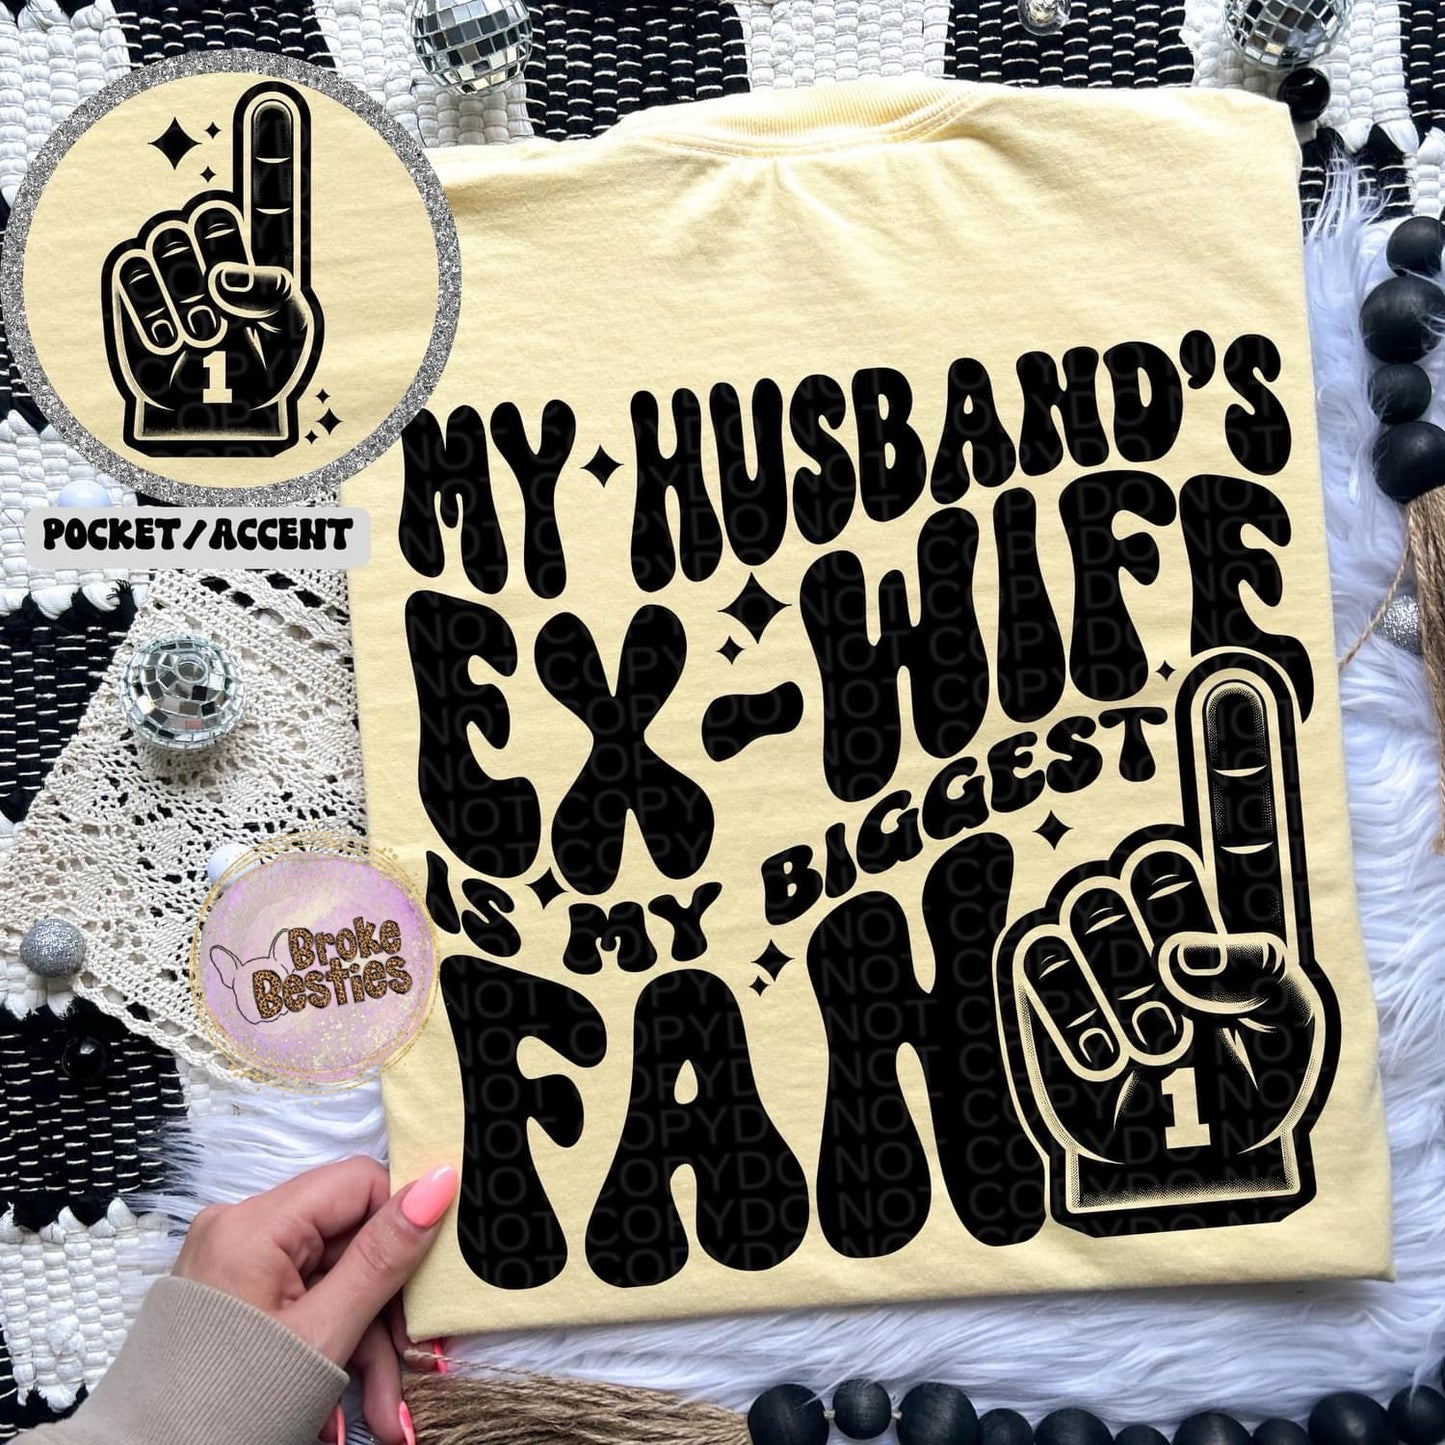 My Biggest Fan (Husband Versions)